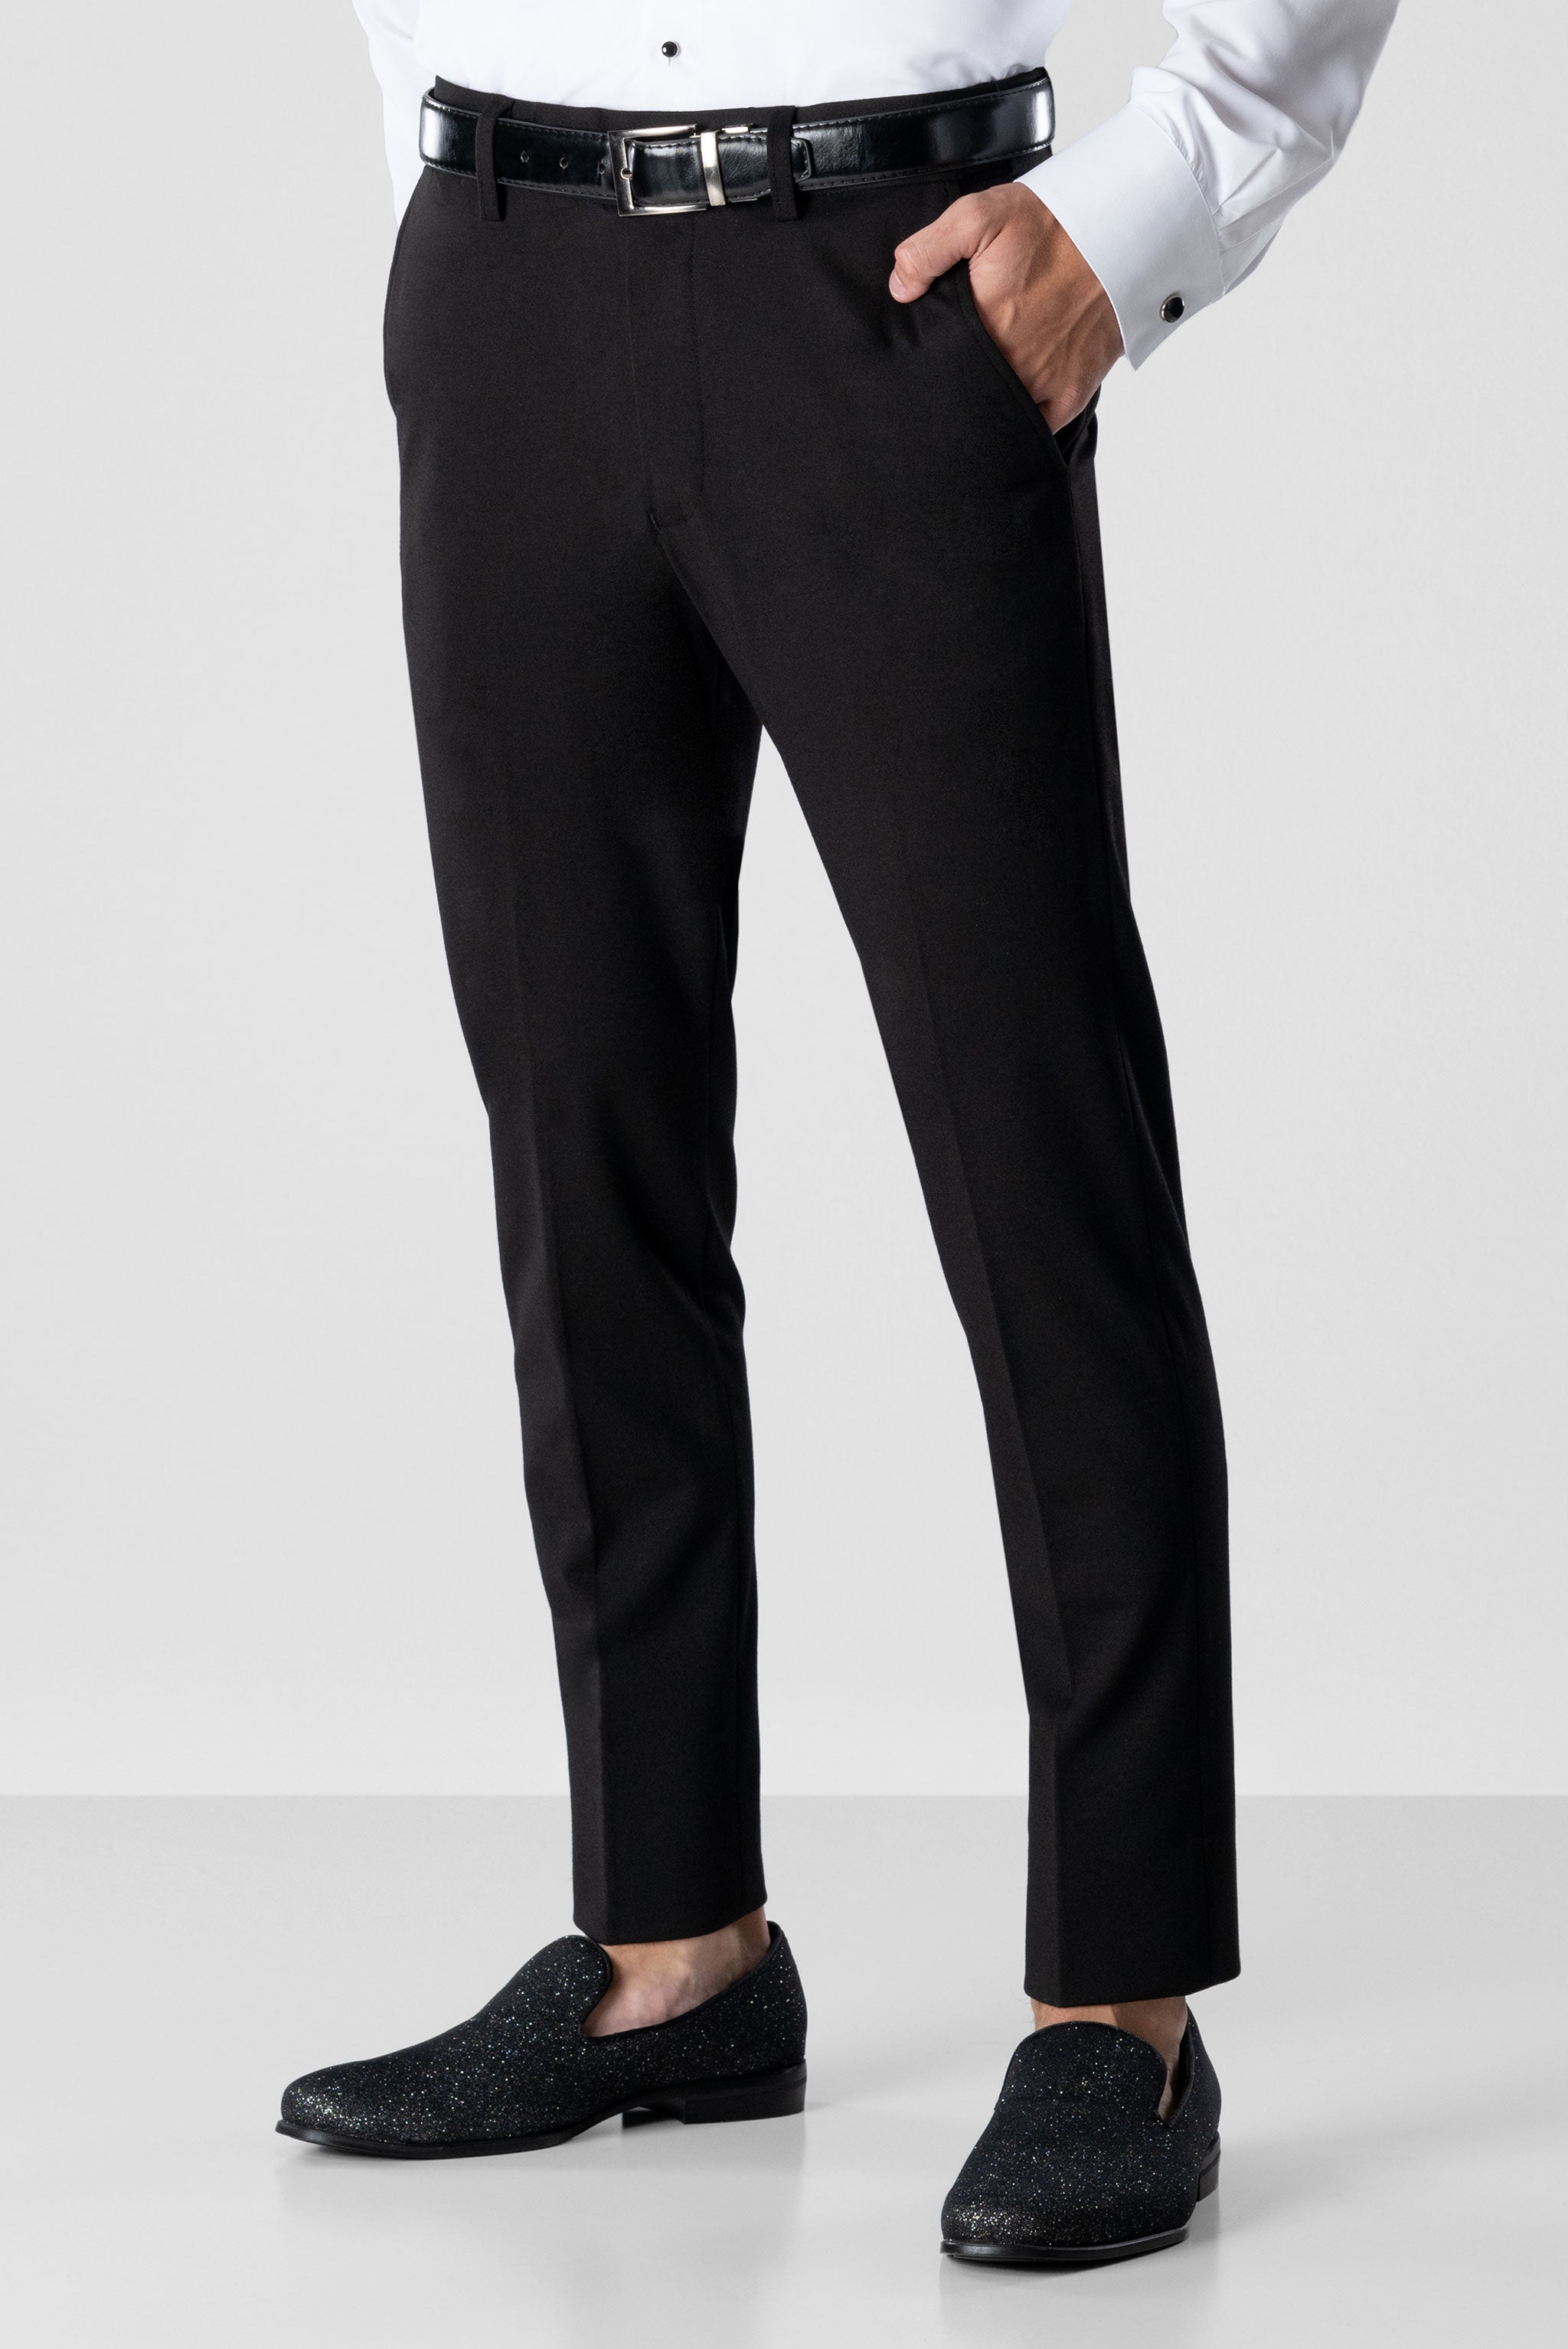 Black Stretch Euro Slim Fit Suit Pants - Jim's Formal Wear – Jim's Formal  Wear Shop